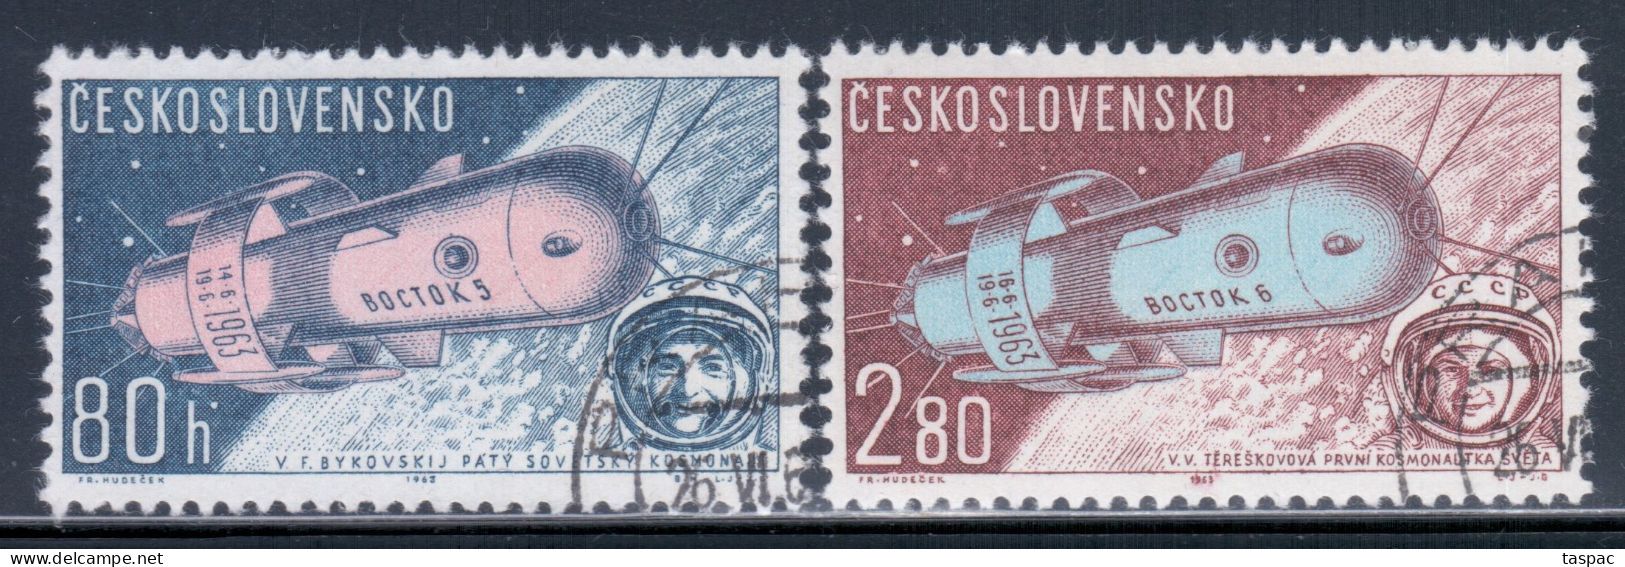 Czechoslovakia 1963 Mi# 1413-1414 Used - Vostok 5 And Vostok 6 / Space - Europe